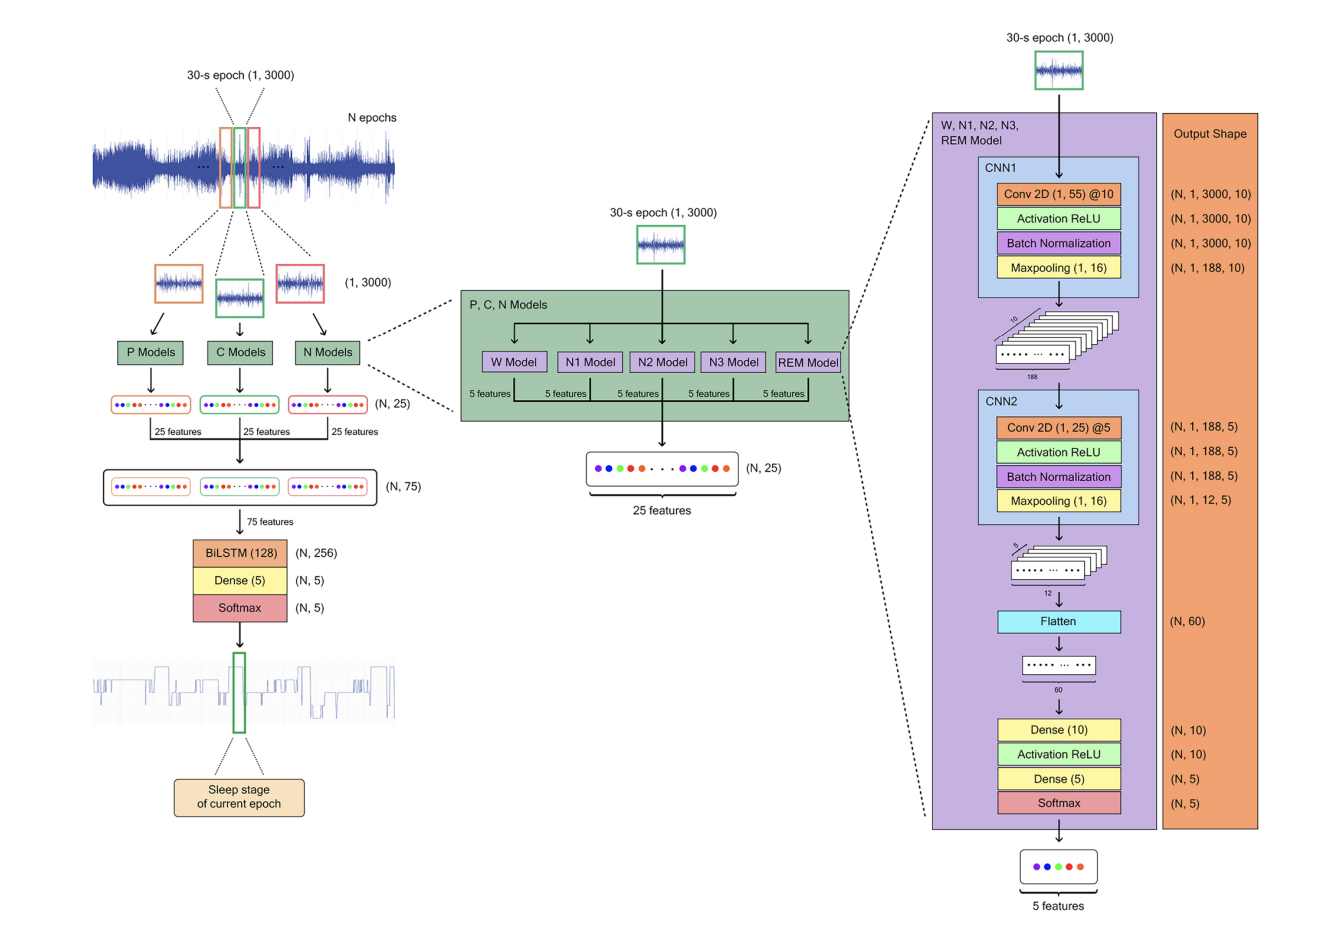  Meet ZleepAnlystNet: A Novel Deep Learning Model for Automatic Sleep Stage Scoring based on Single-Channel Raw EEG Data Using Separating Training